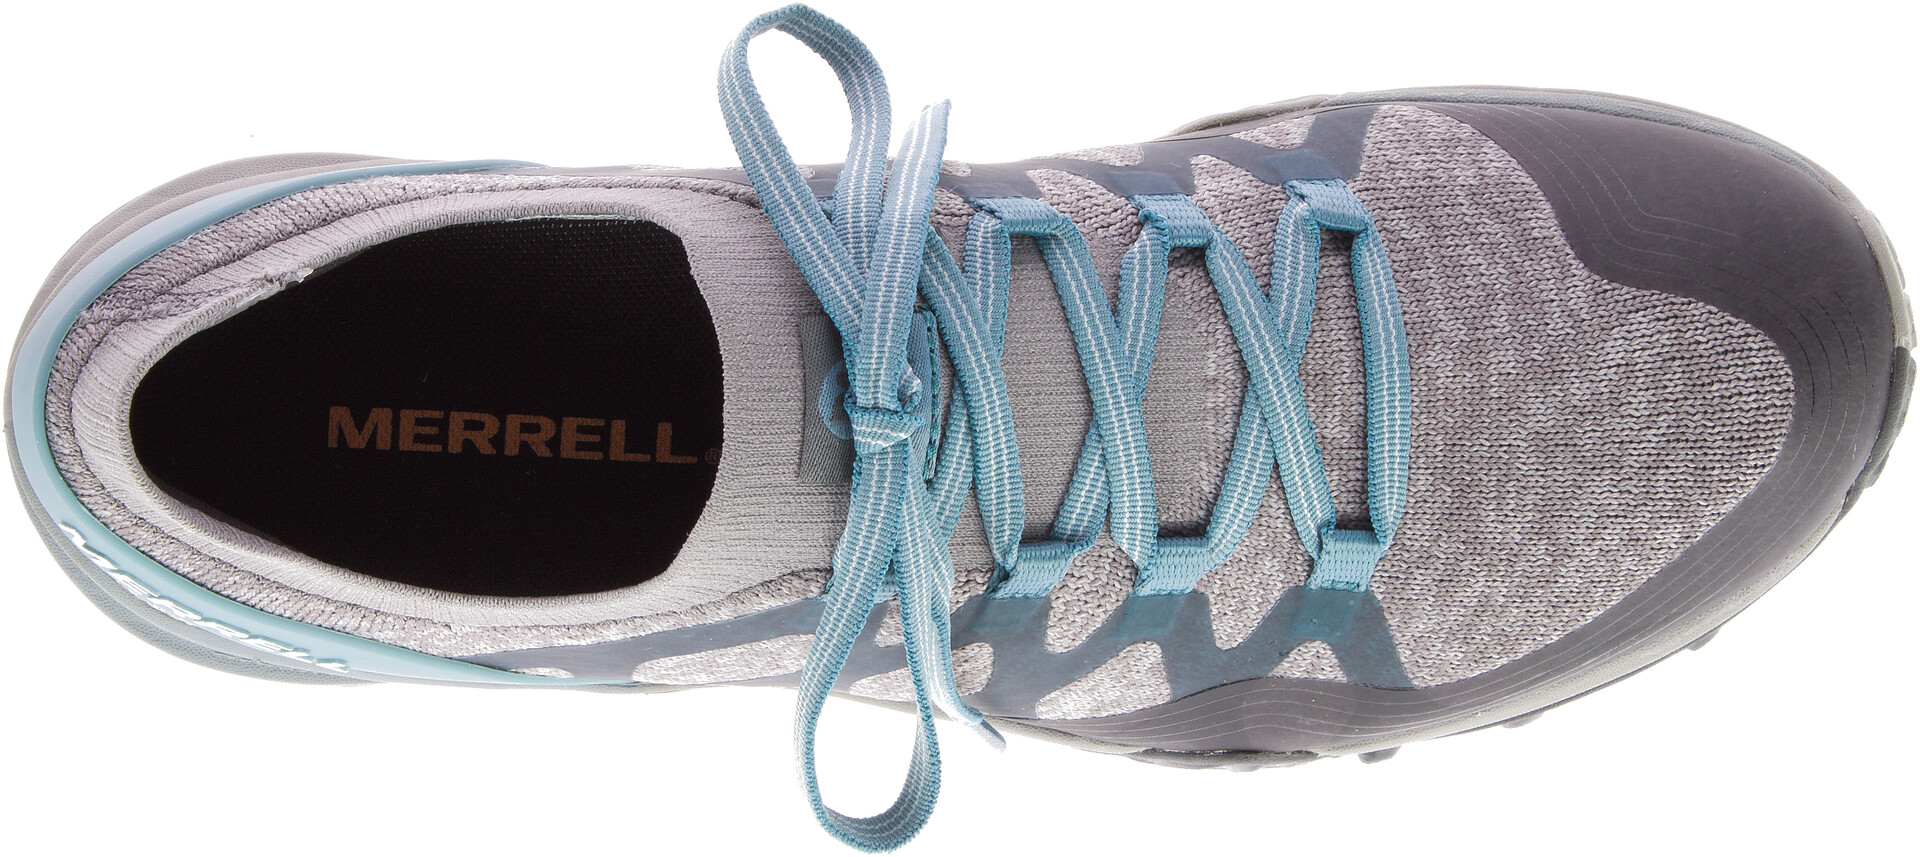 Merrell Siren 3 Knit Zapatillas de Senderismo para Mujer